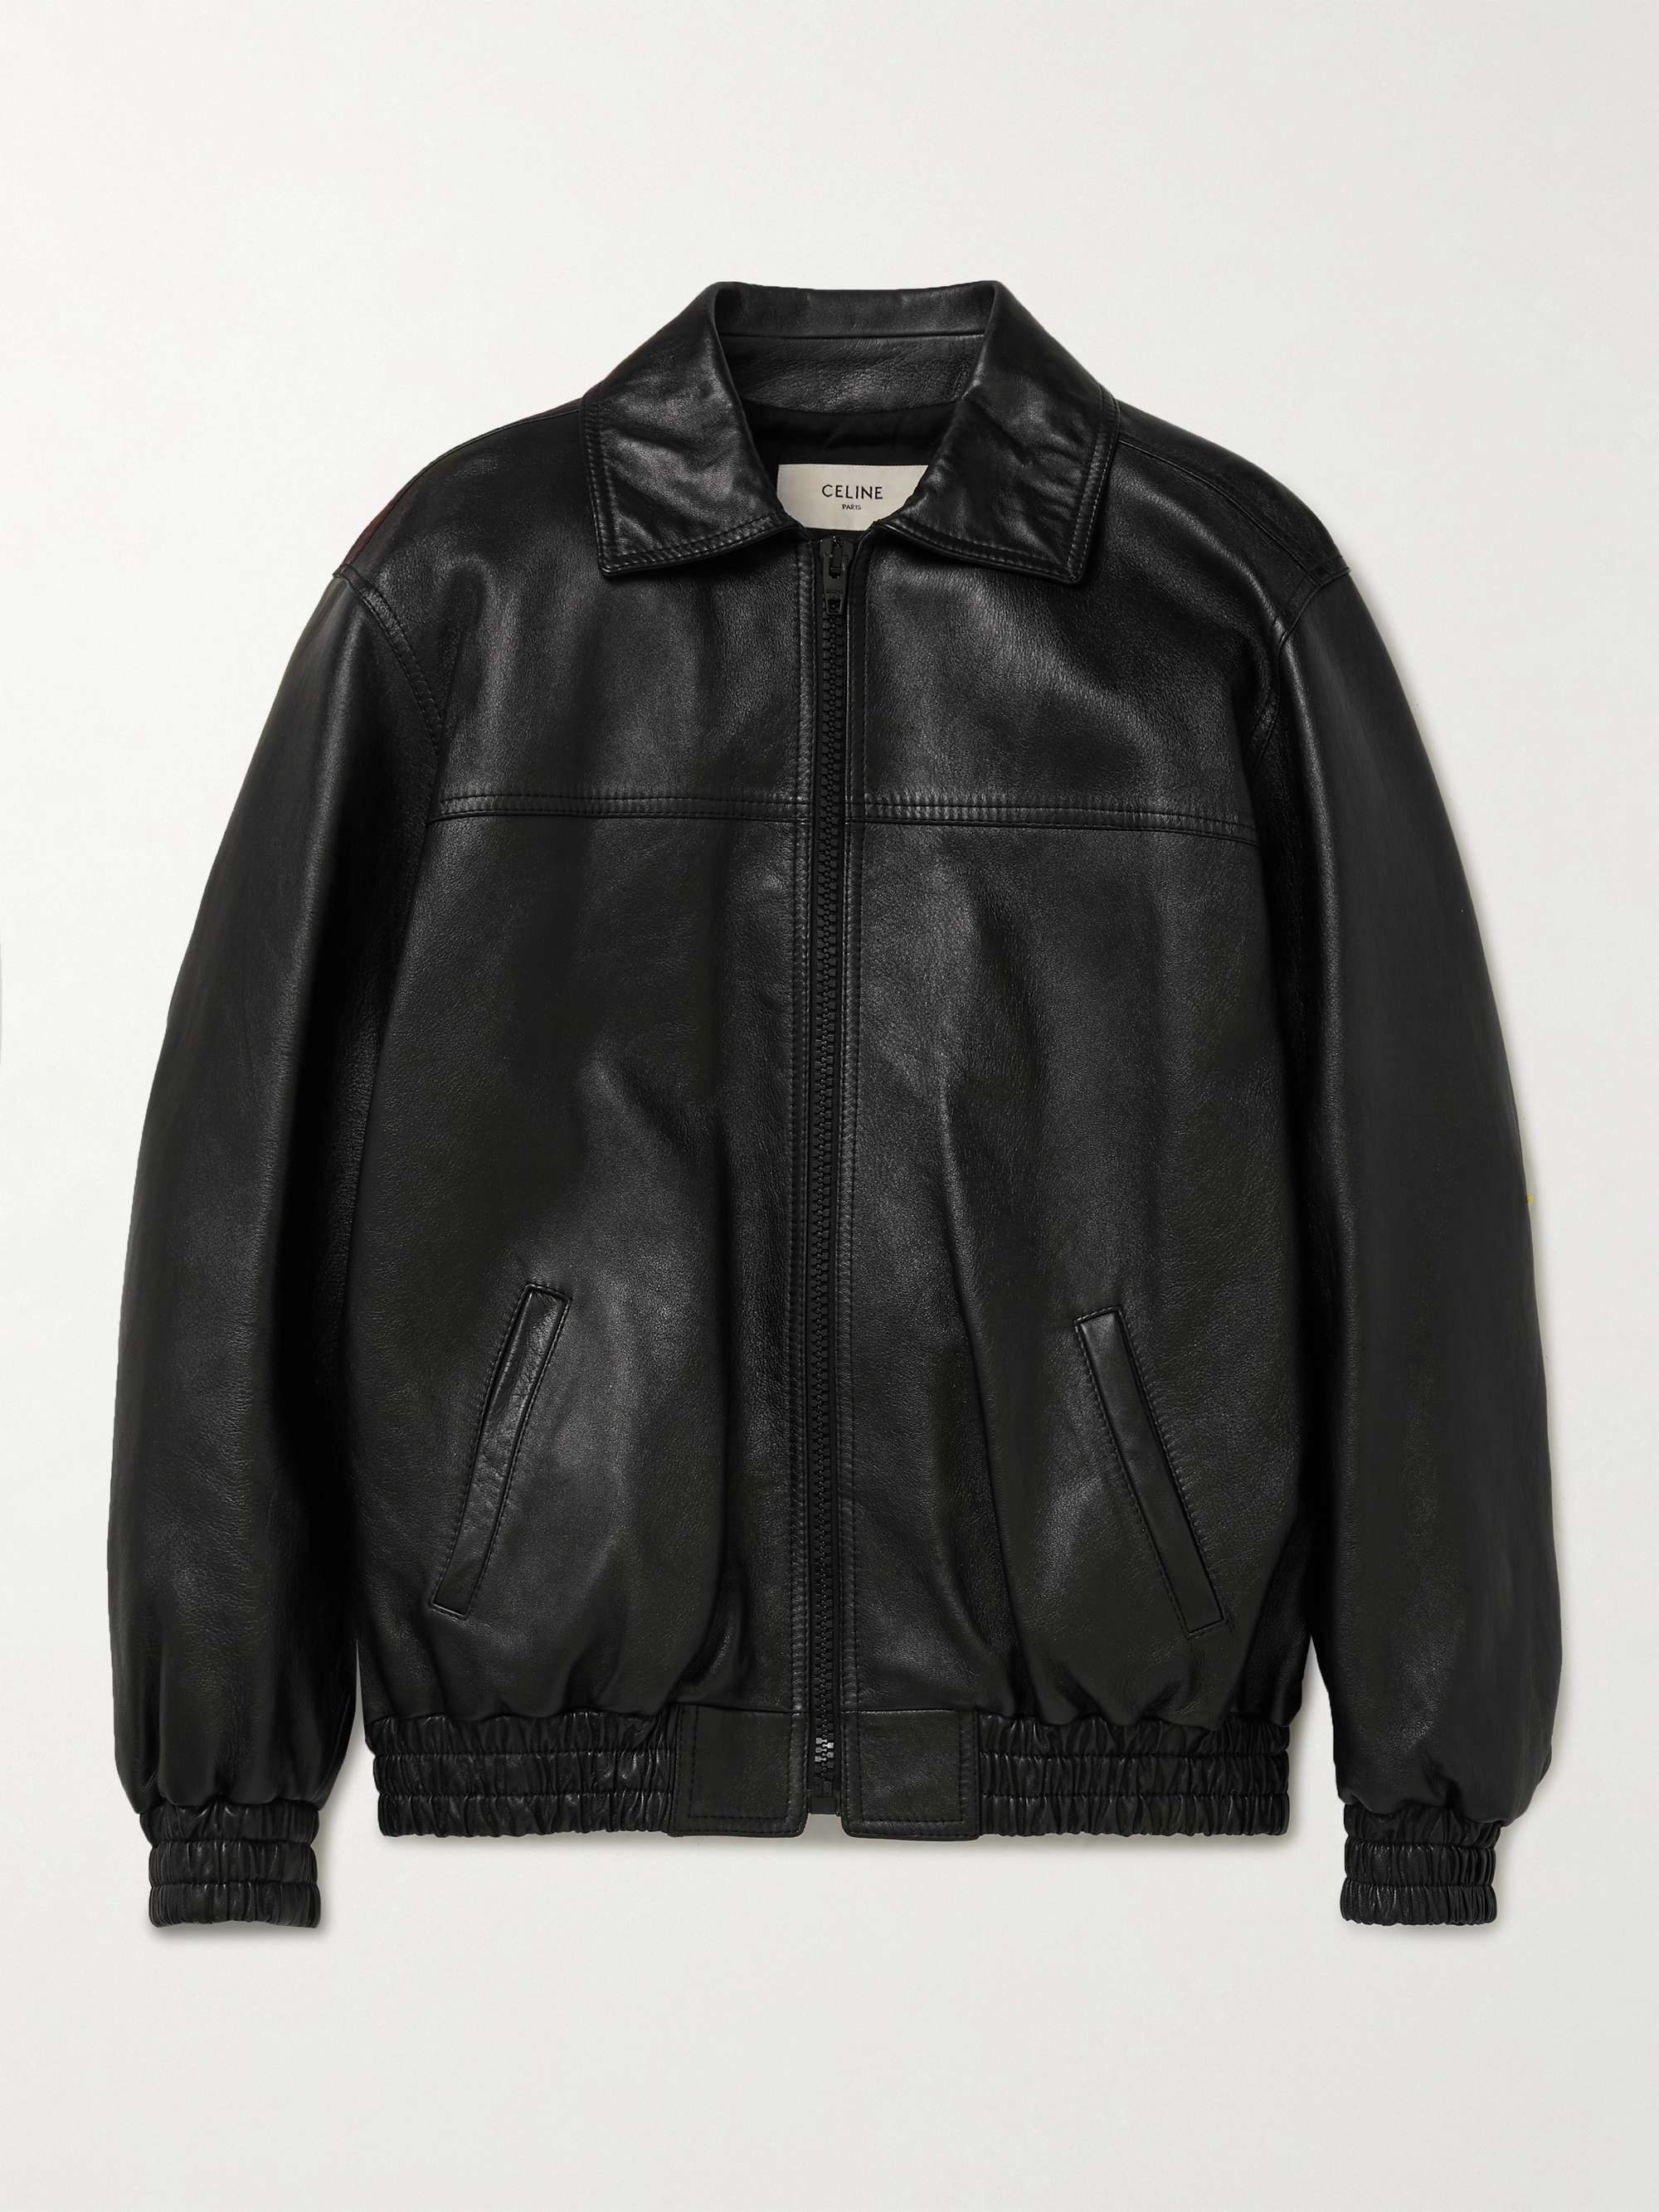 CELINE HOMME Fringed Logo-Embellished Leather Blouson Jacket | MR